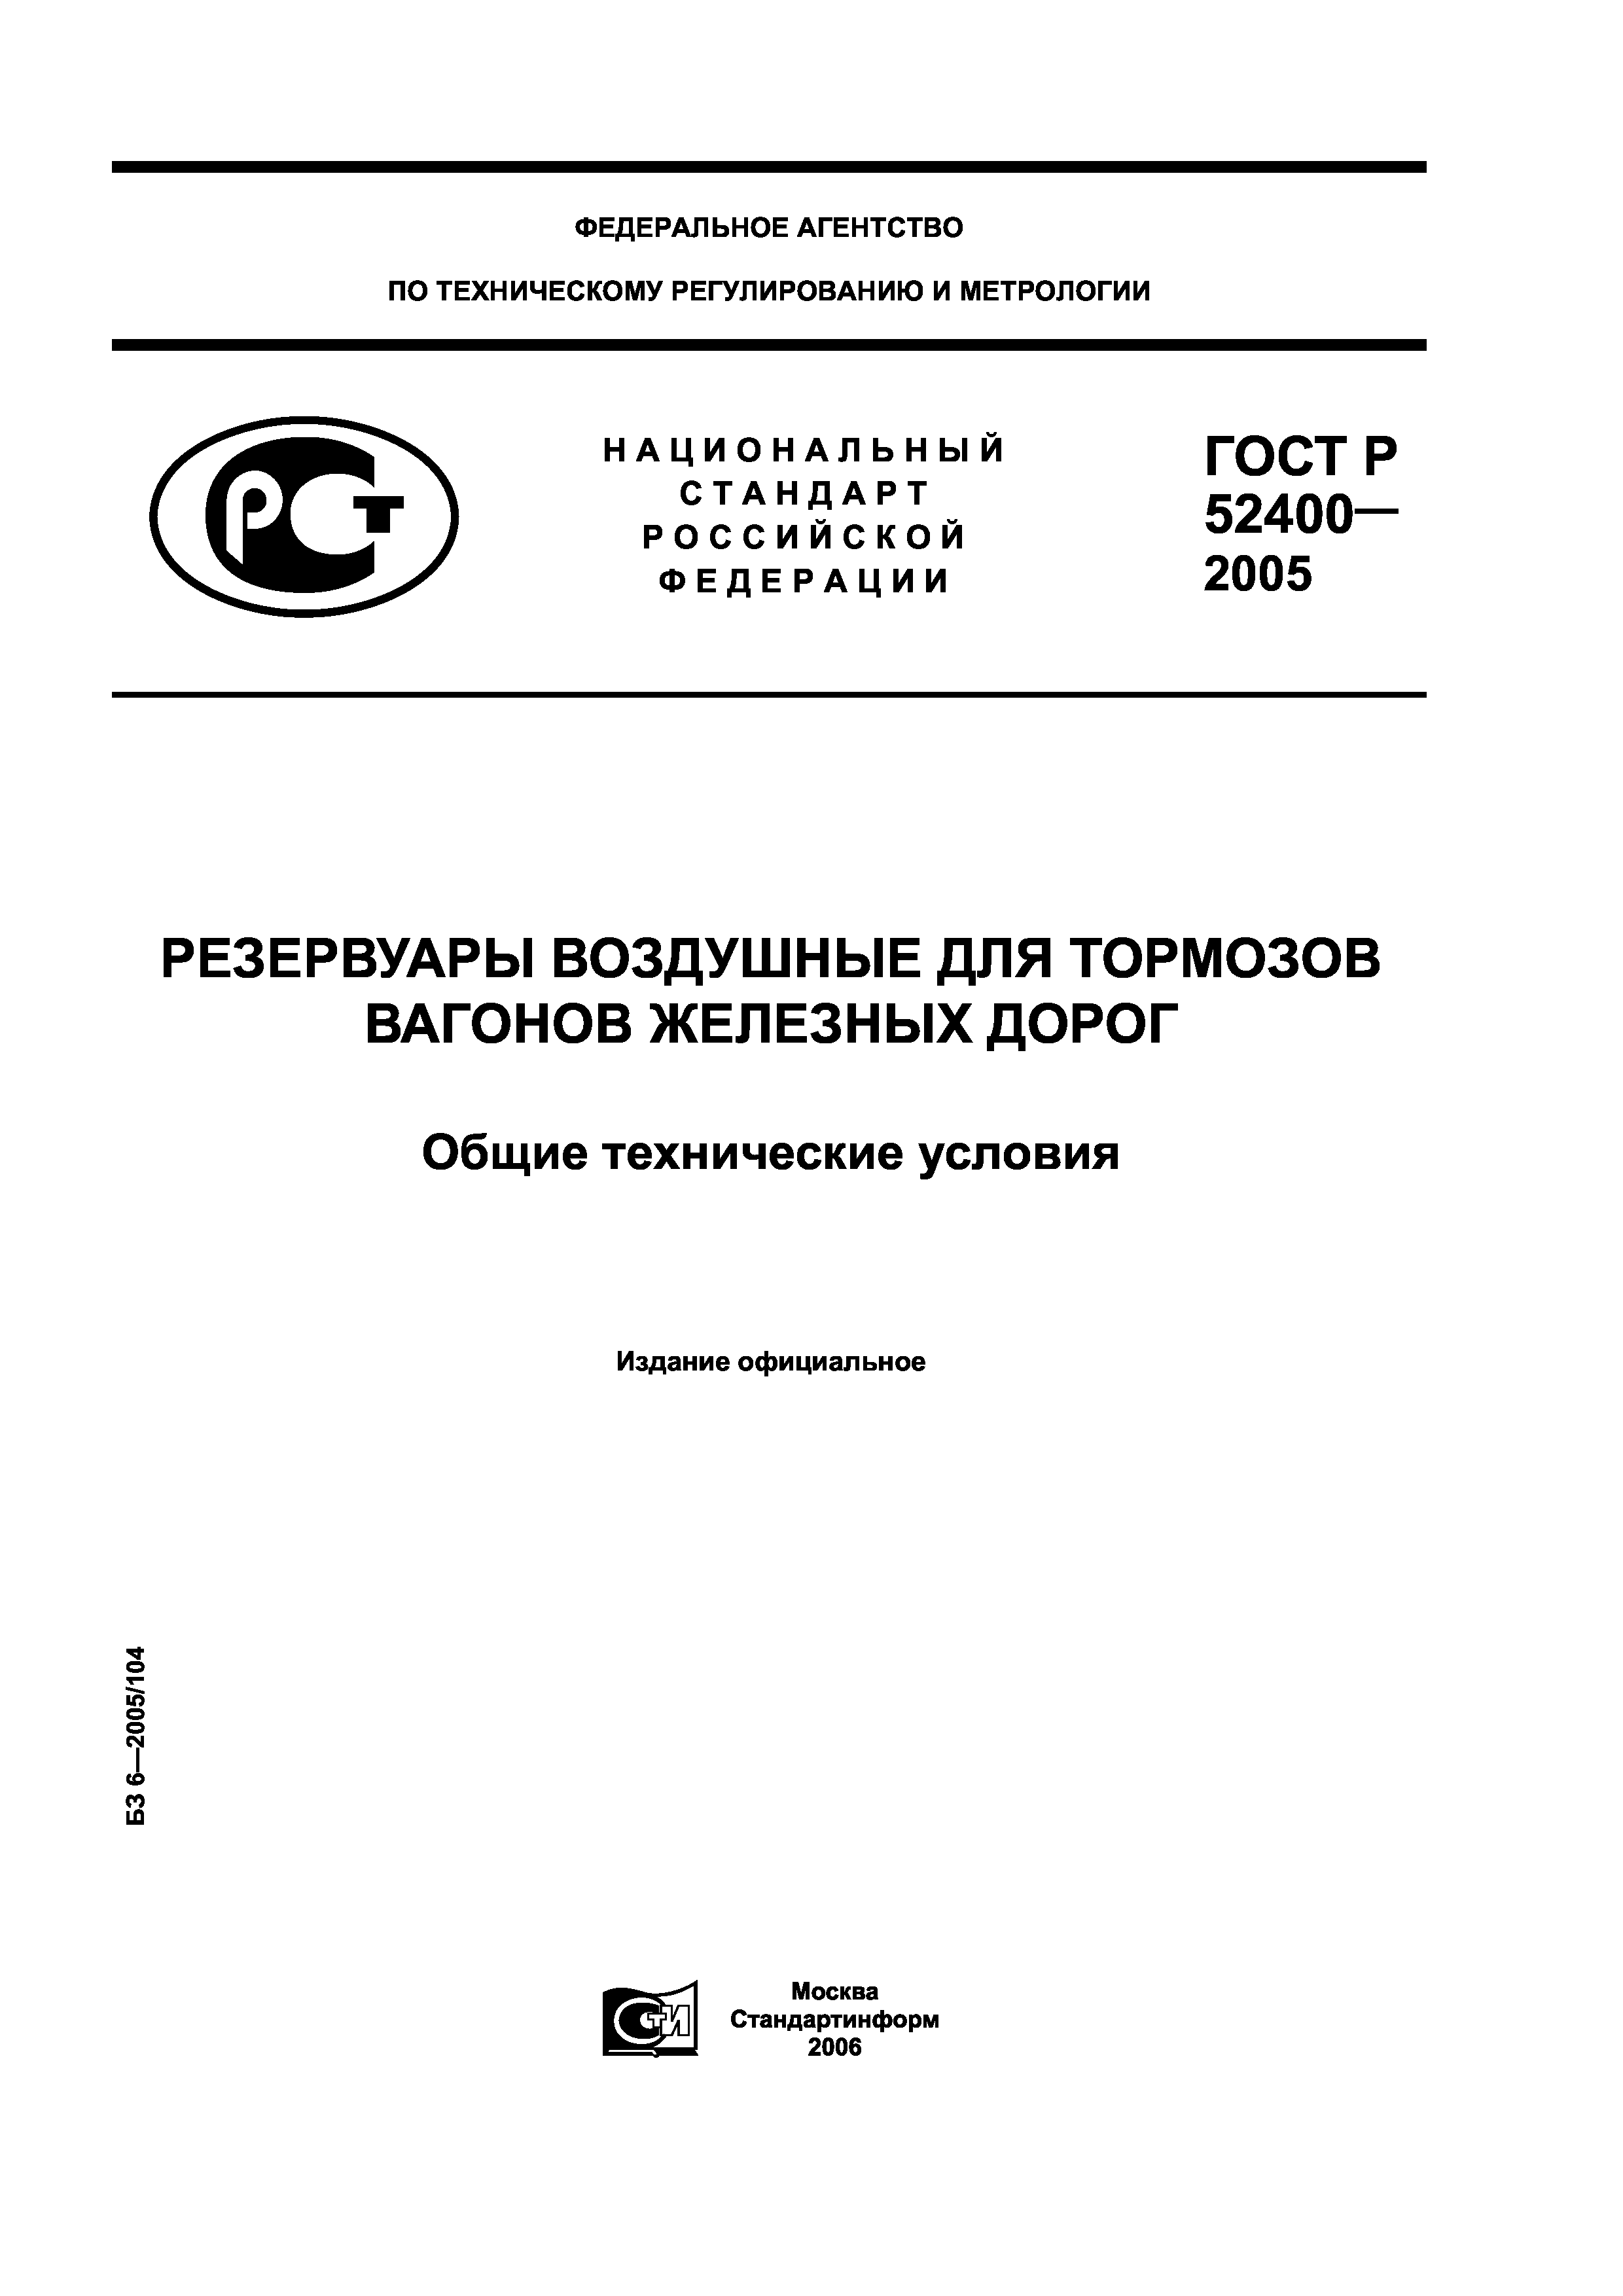 ГОСТ Р 52400-2005